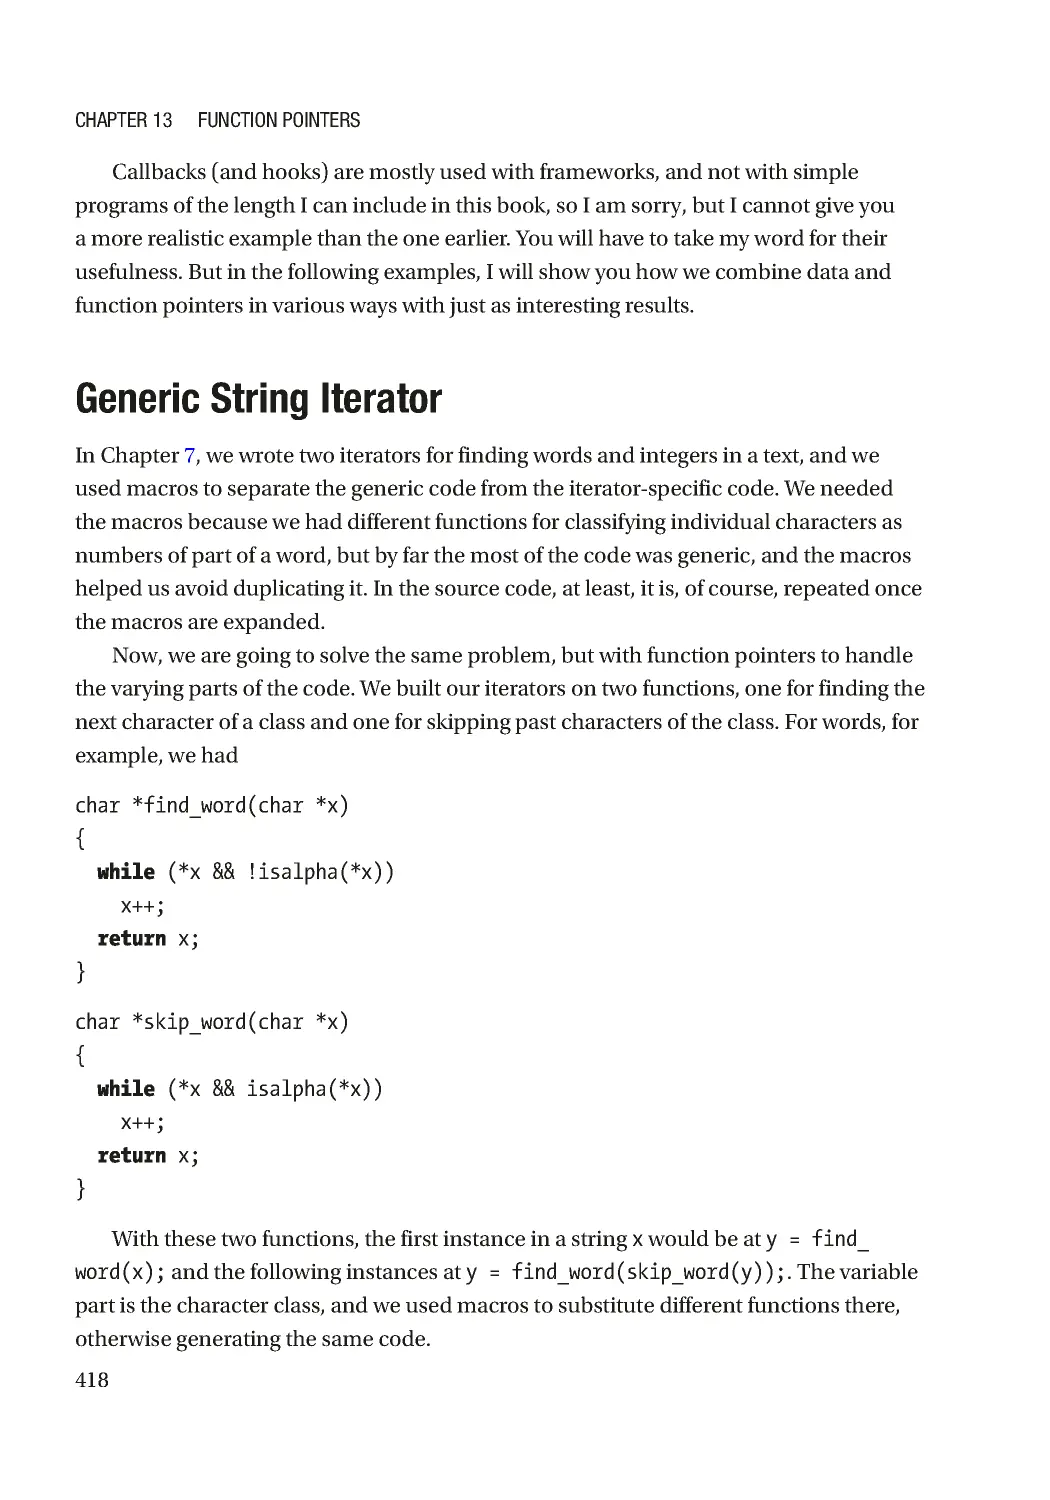 Generic String Iterator